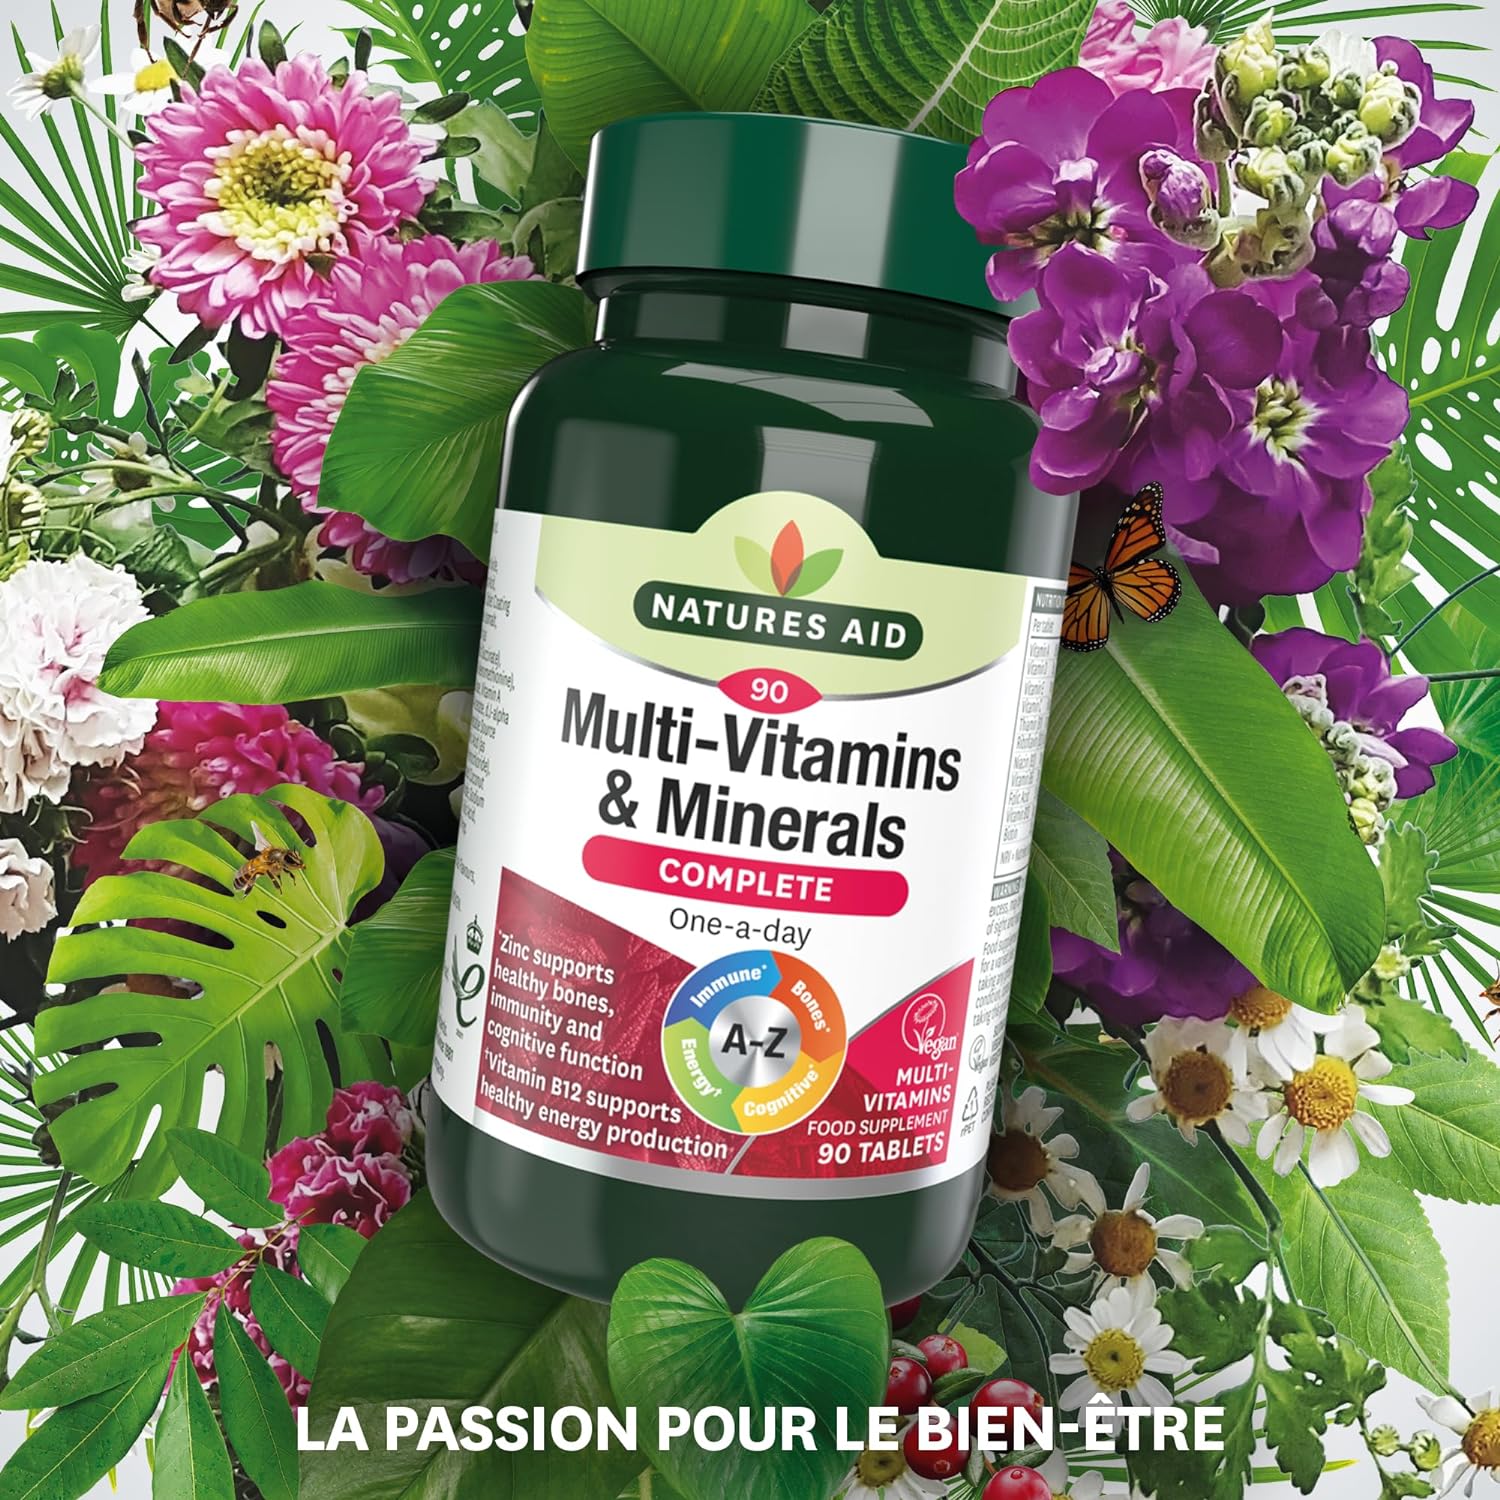 Complete Multi-Vitamins & Minerals 90 Tablets